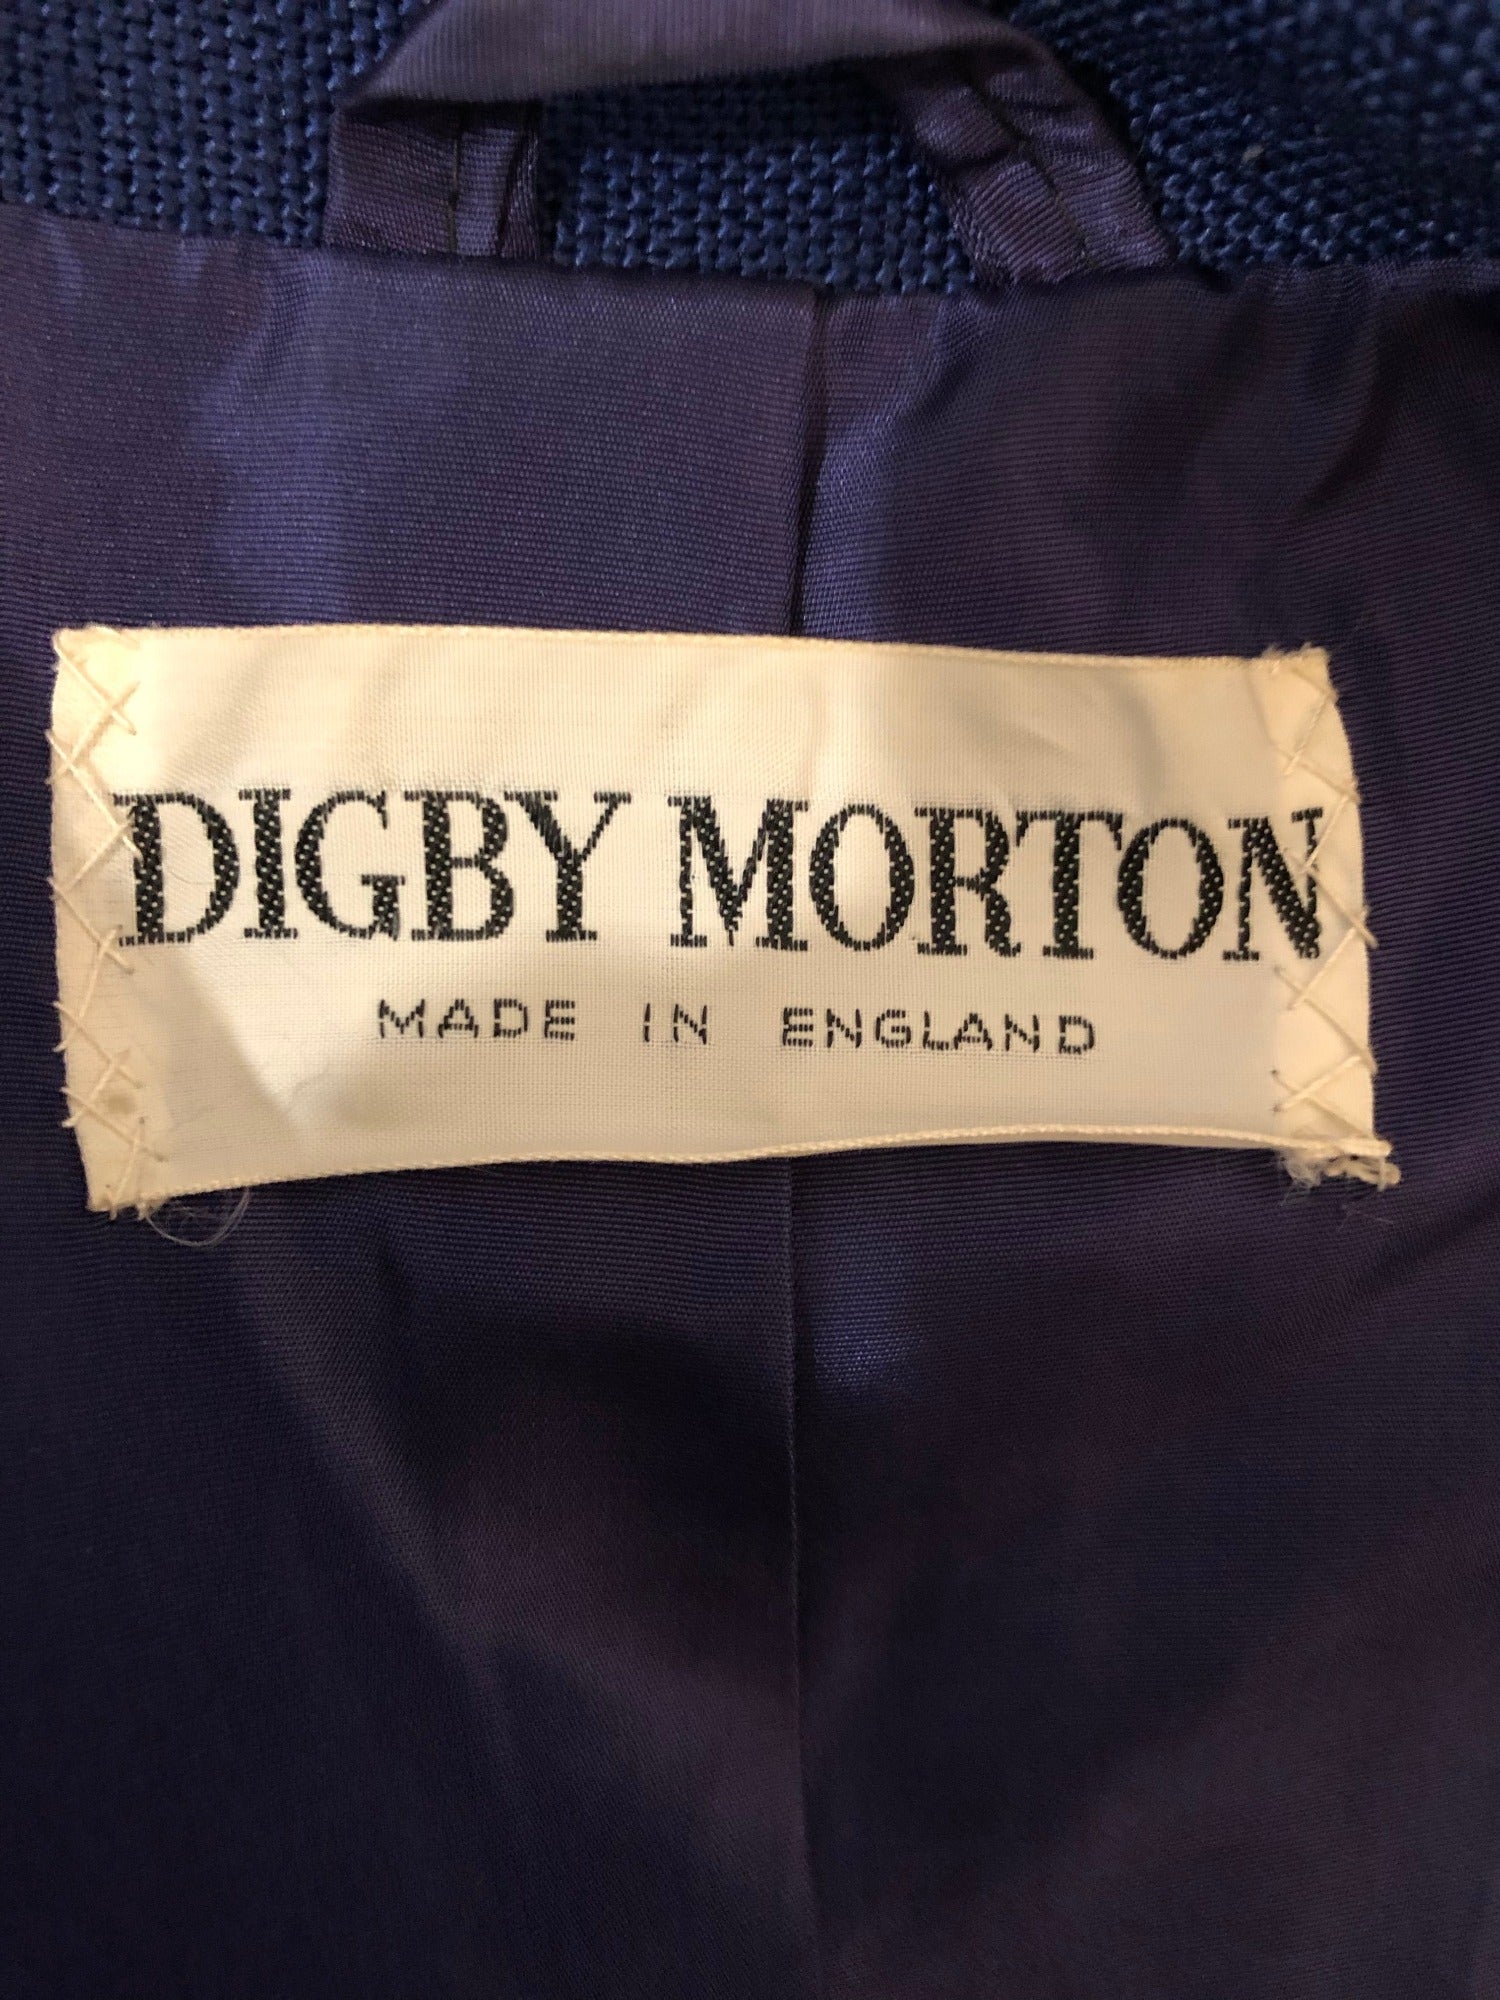 12  vintage  Urban Village Vintage  urban village  two button  pockets  mens  long sleeve  jacket  double breasted  Digby Morton  button  blue  blazer jacket  Blazer  70s  1970s